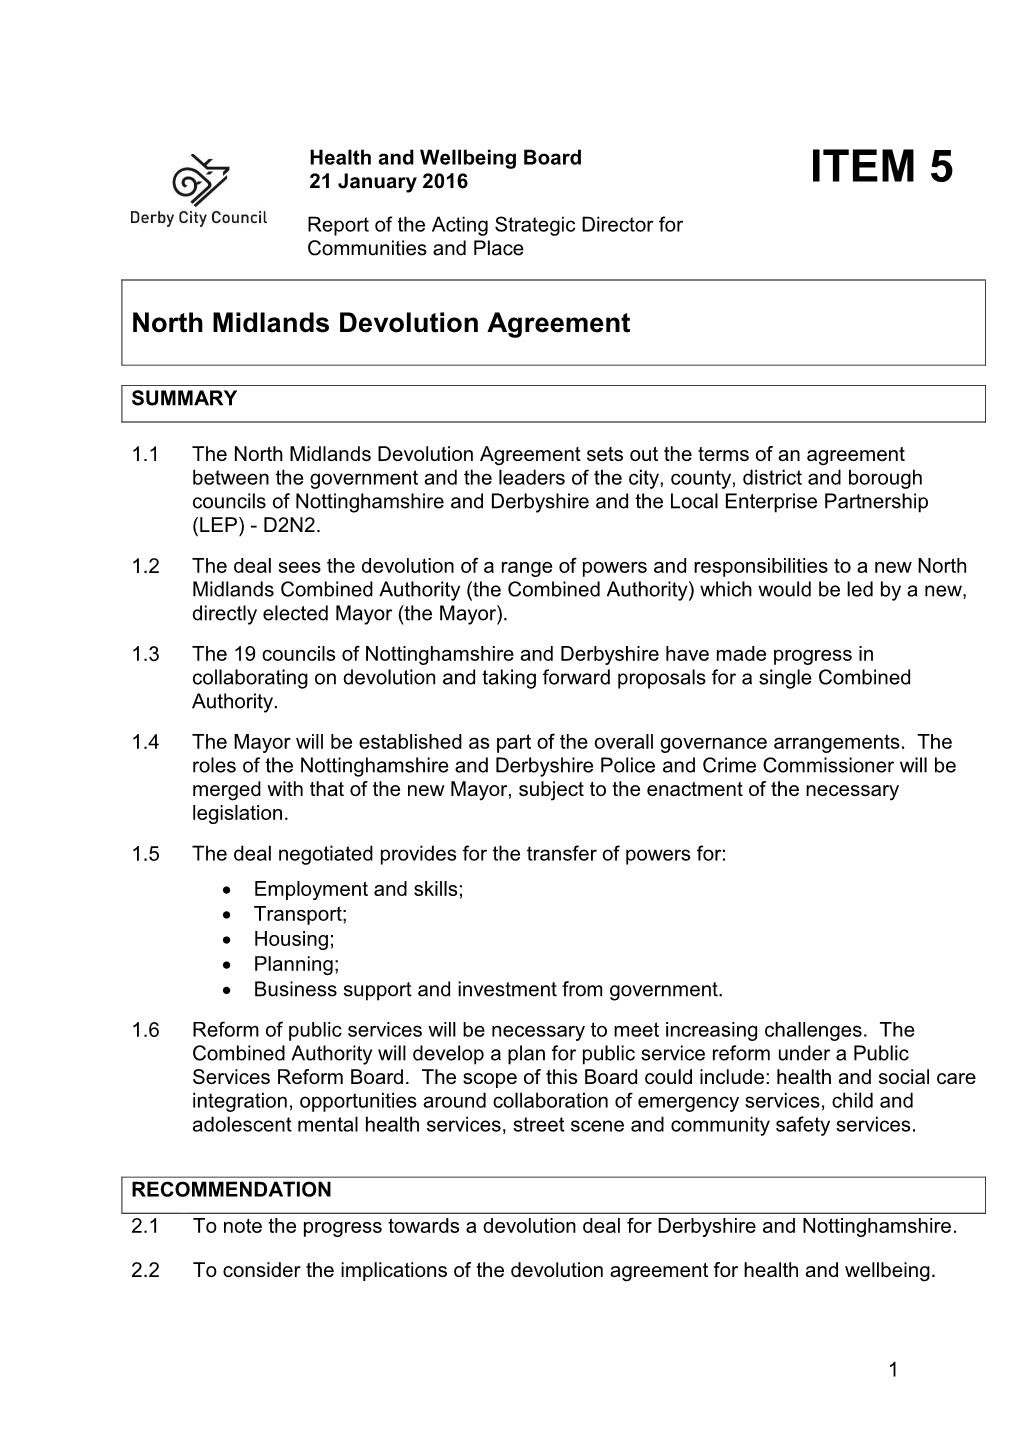 ITEM 5 North Midlands Devolution Agreement